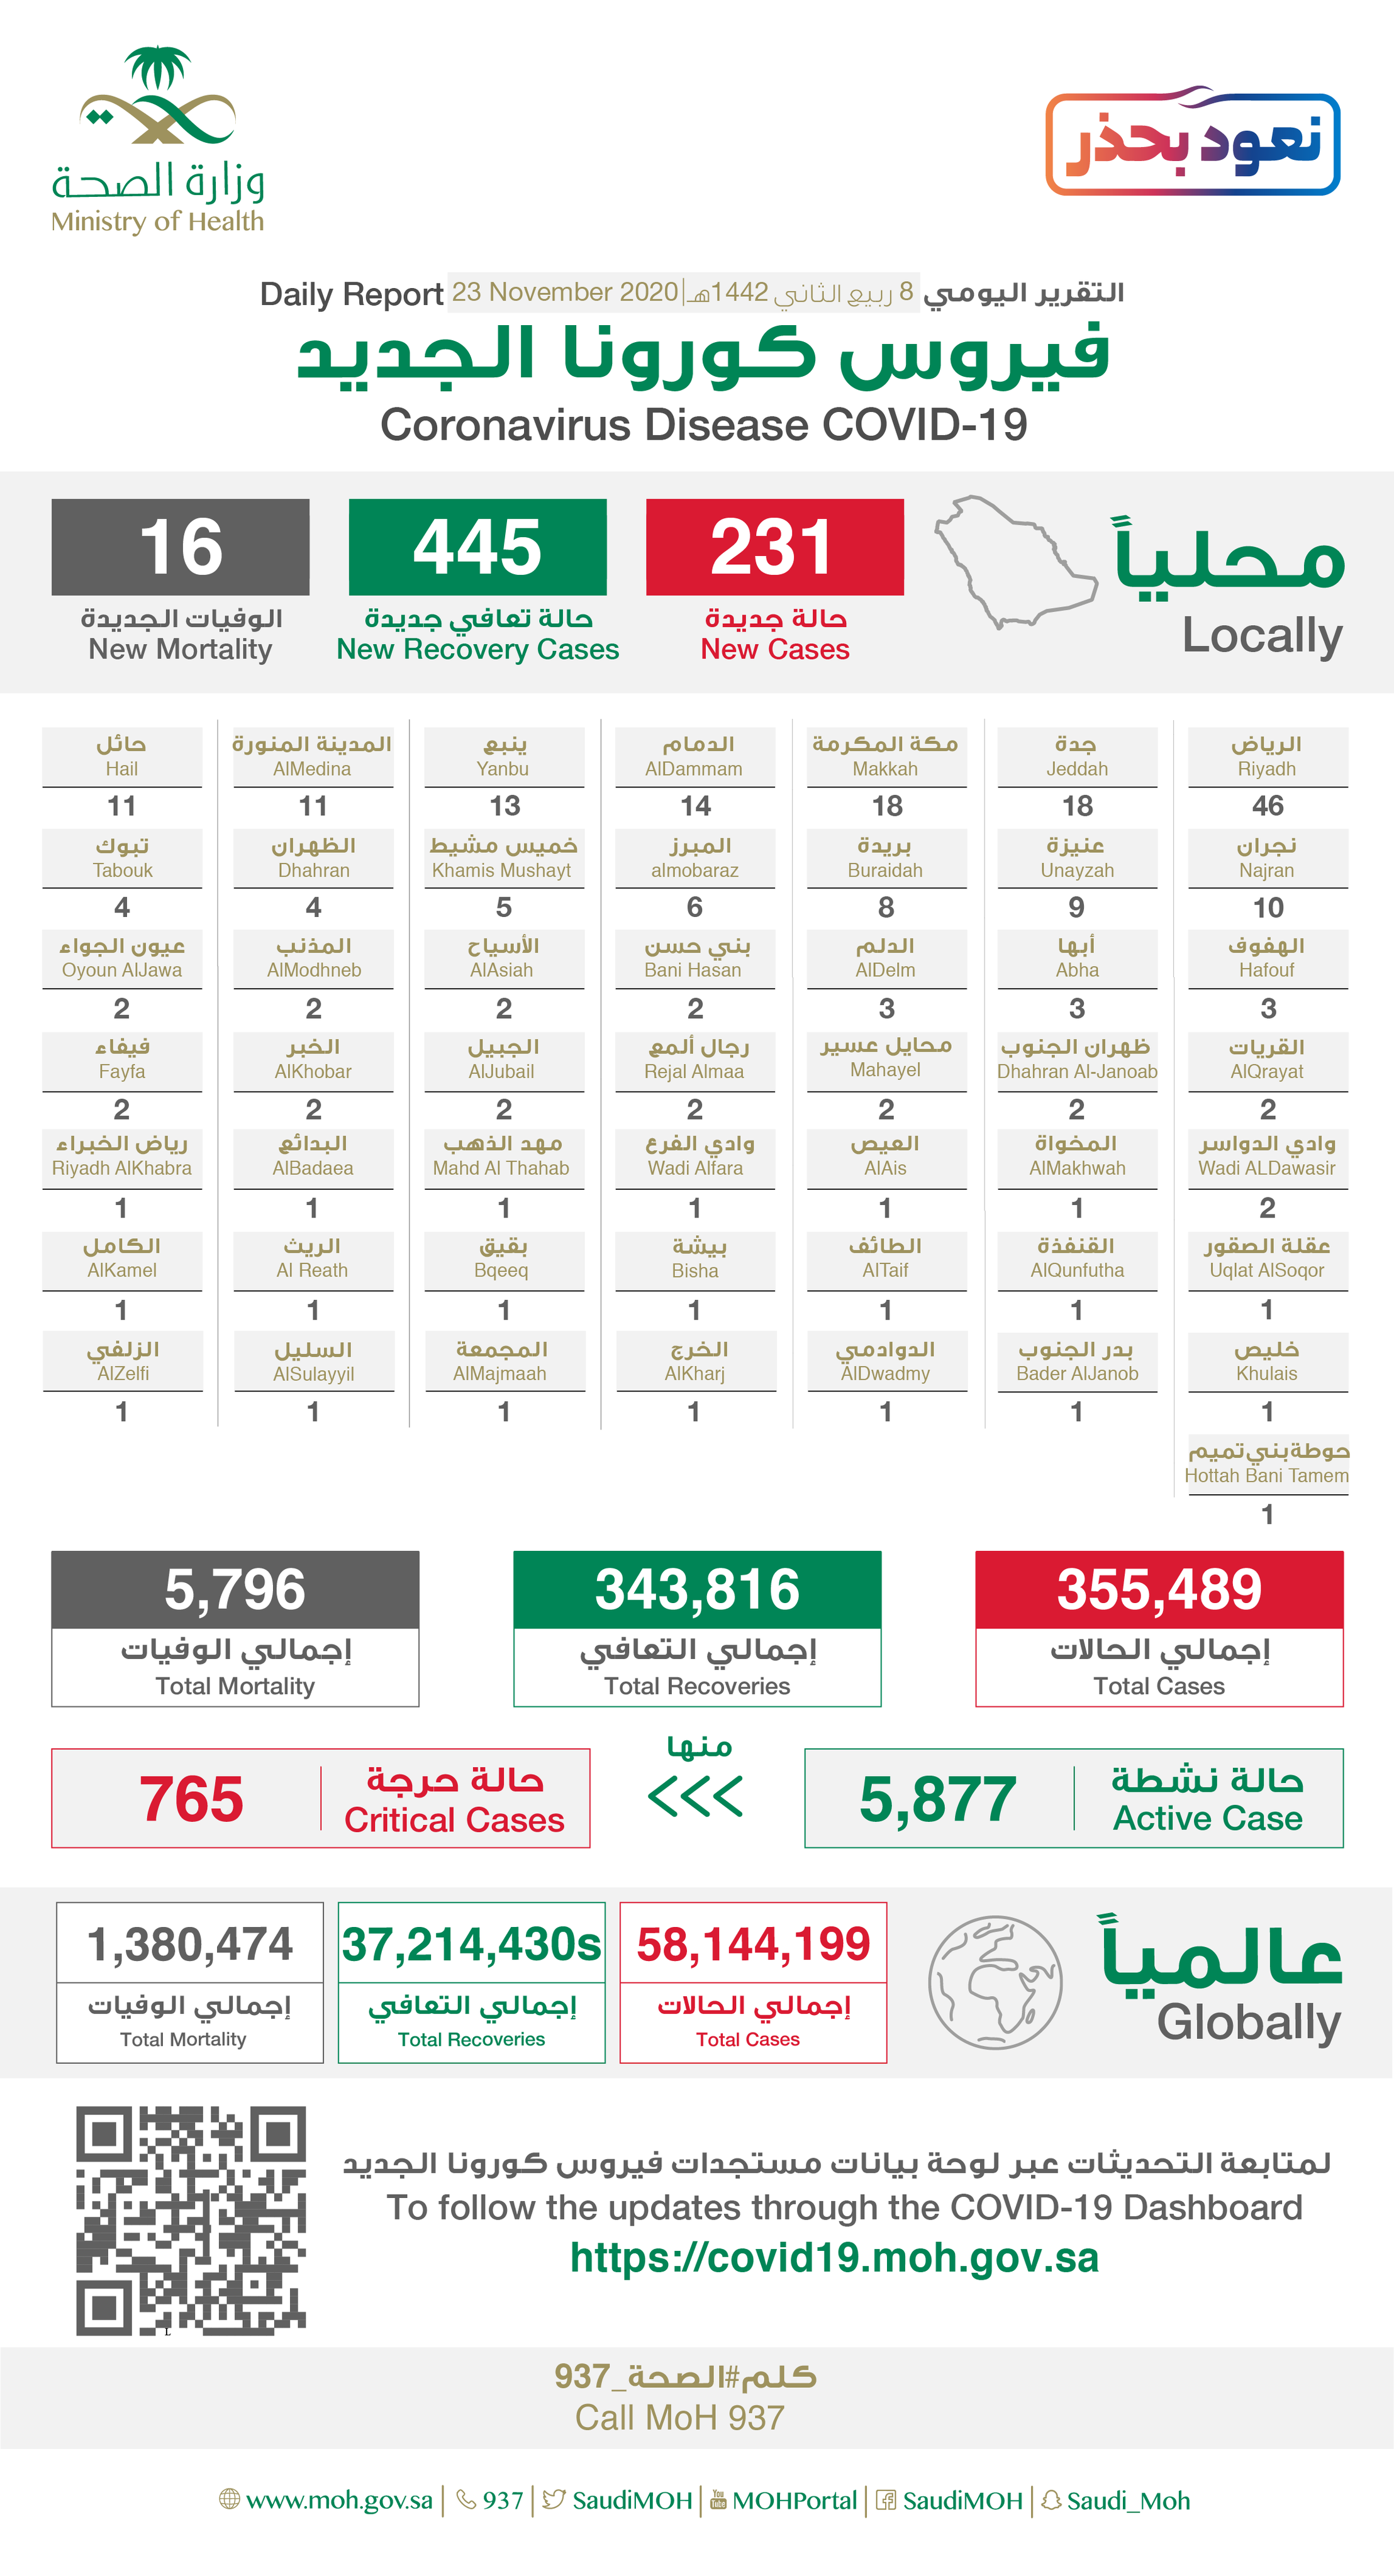 Saudi Arabia Coronavirus : Total Cases :355,489 , New Cases : 231, Cured : 343,816, Deaths: 5796 , Active Cases : 5,877